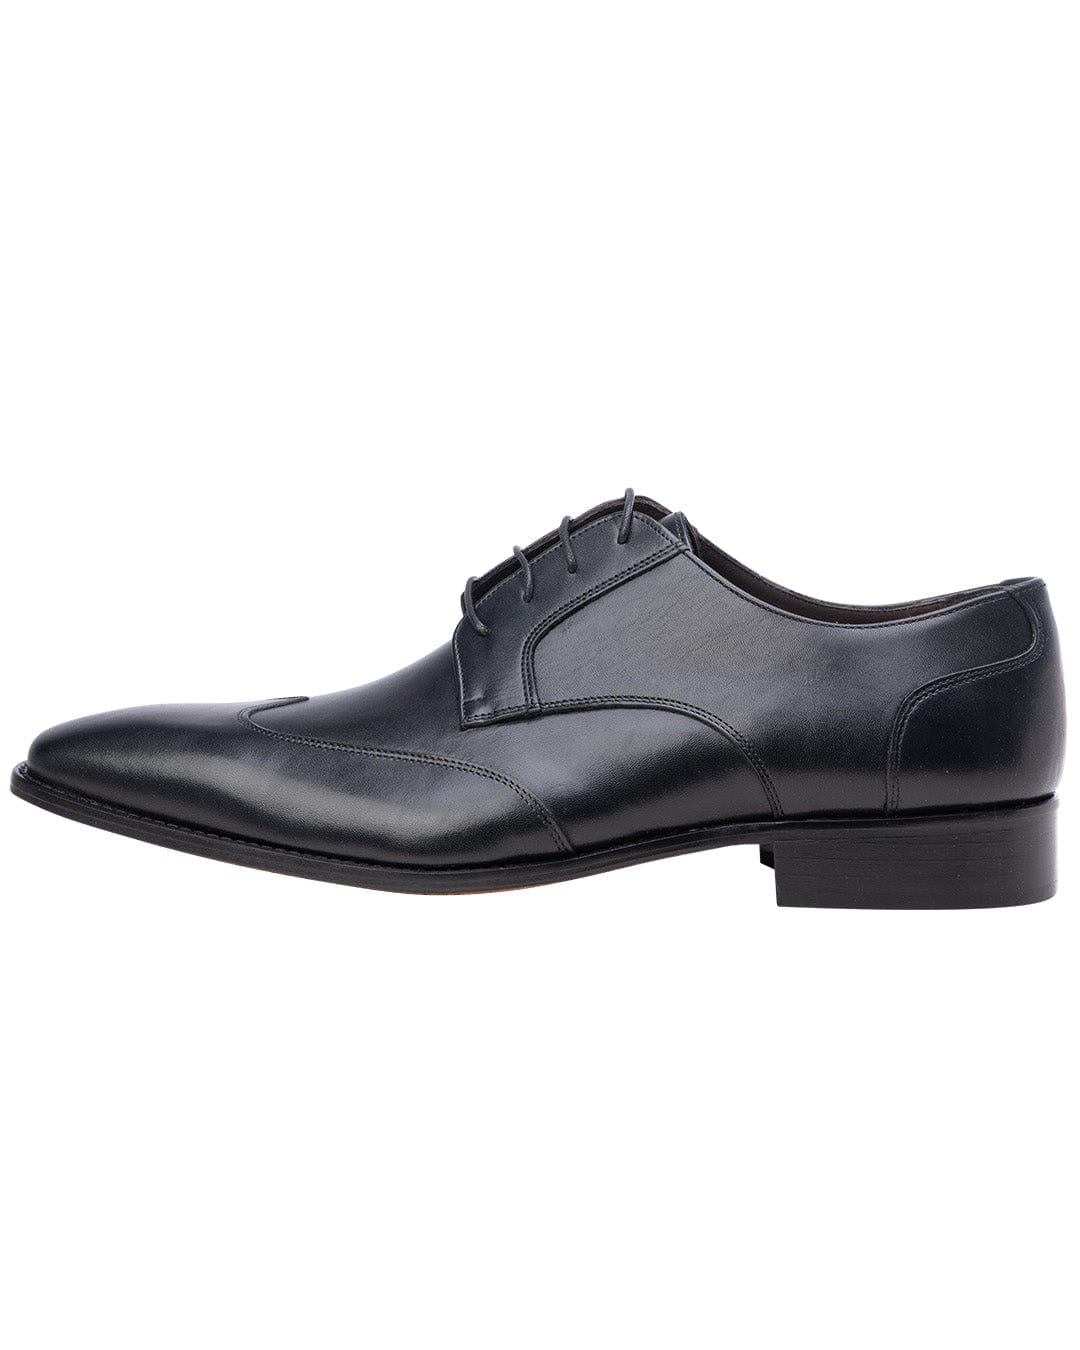 Gagliardi Shoes Gagliardi Black Made in Italy Wing Tip Oxford Shoes